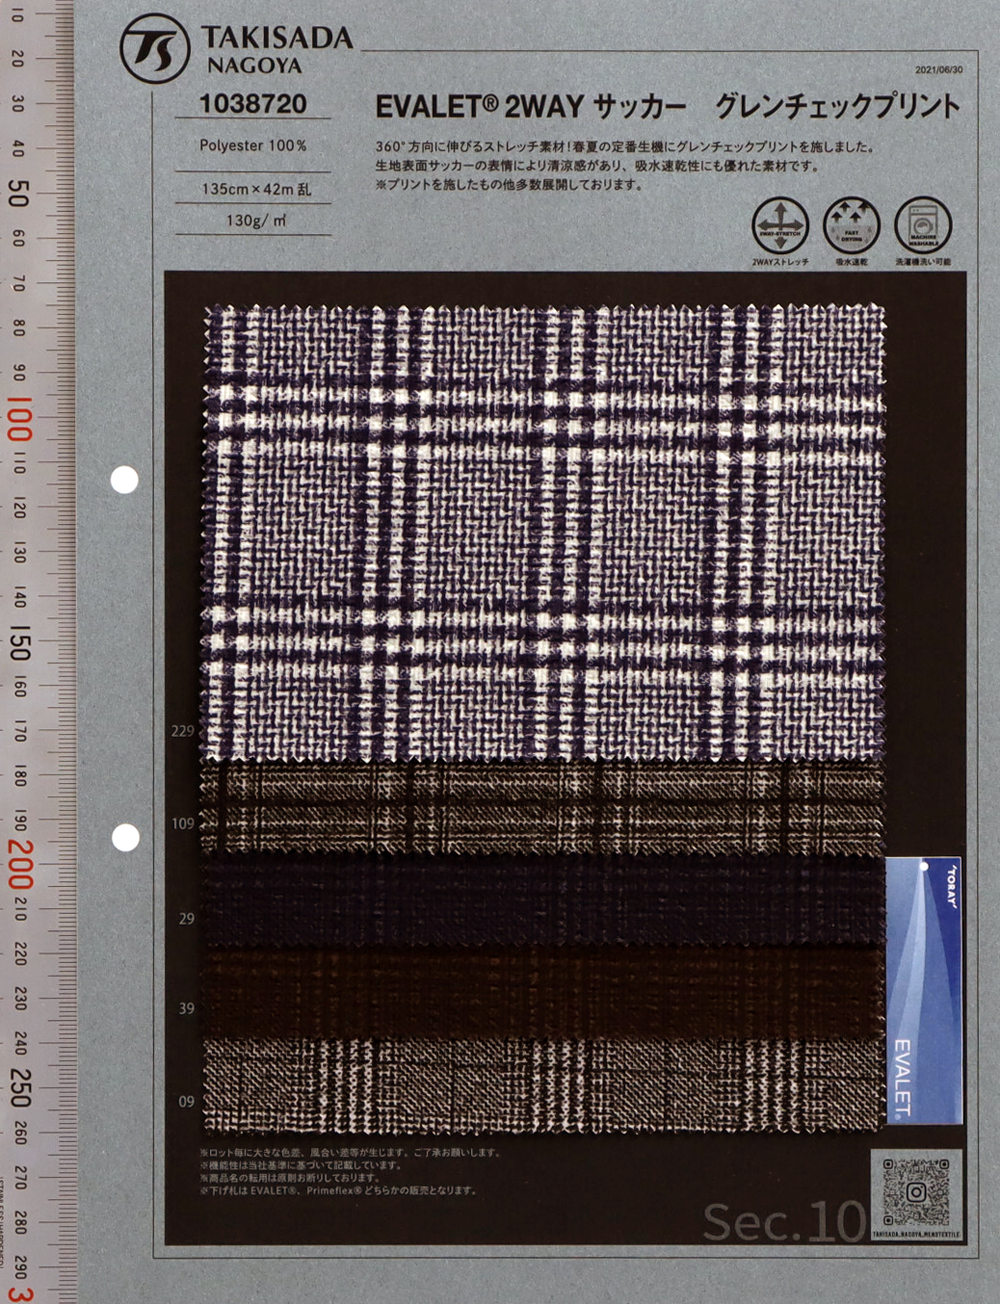 1038720 EVALET® 2WAY Seersucker Glen Check Pt[Fabrication De Textile] Takisada Nagoya